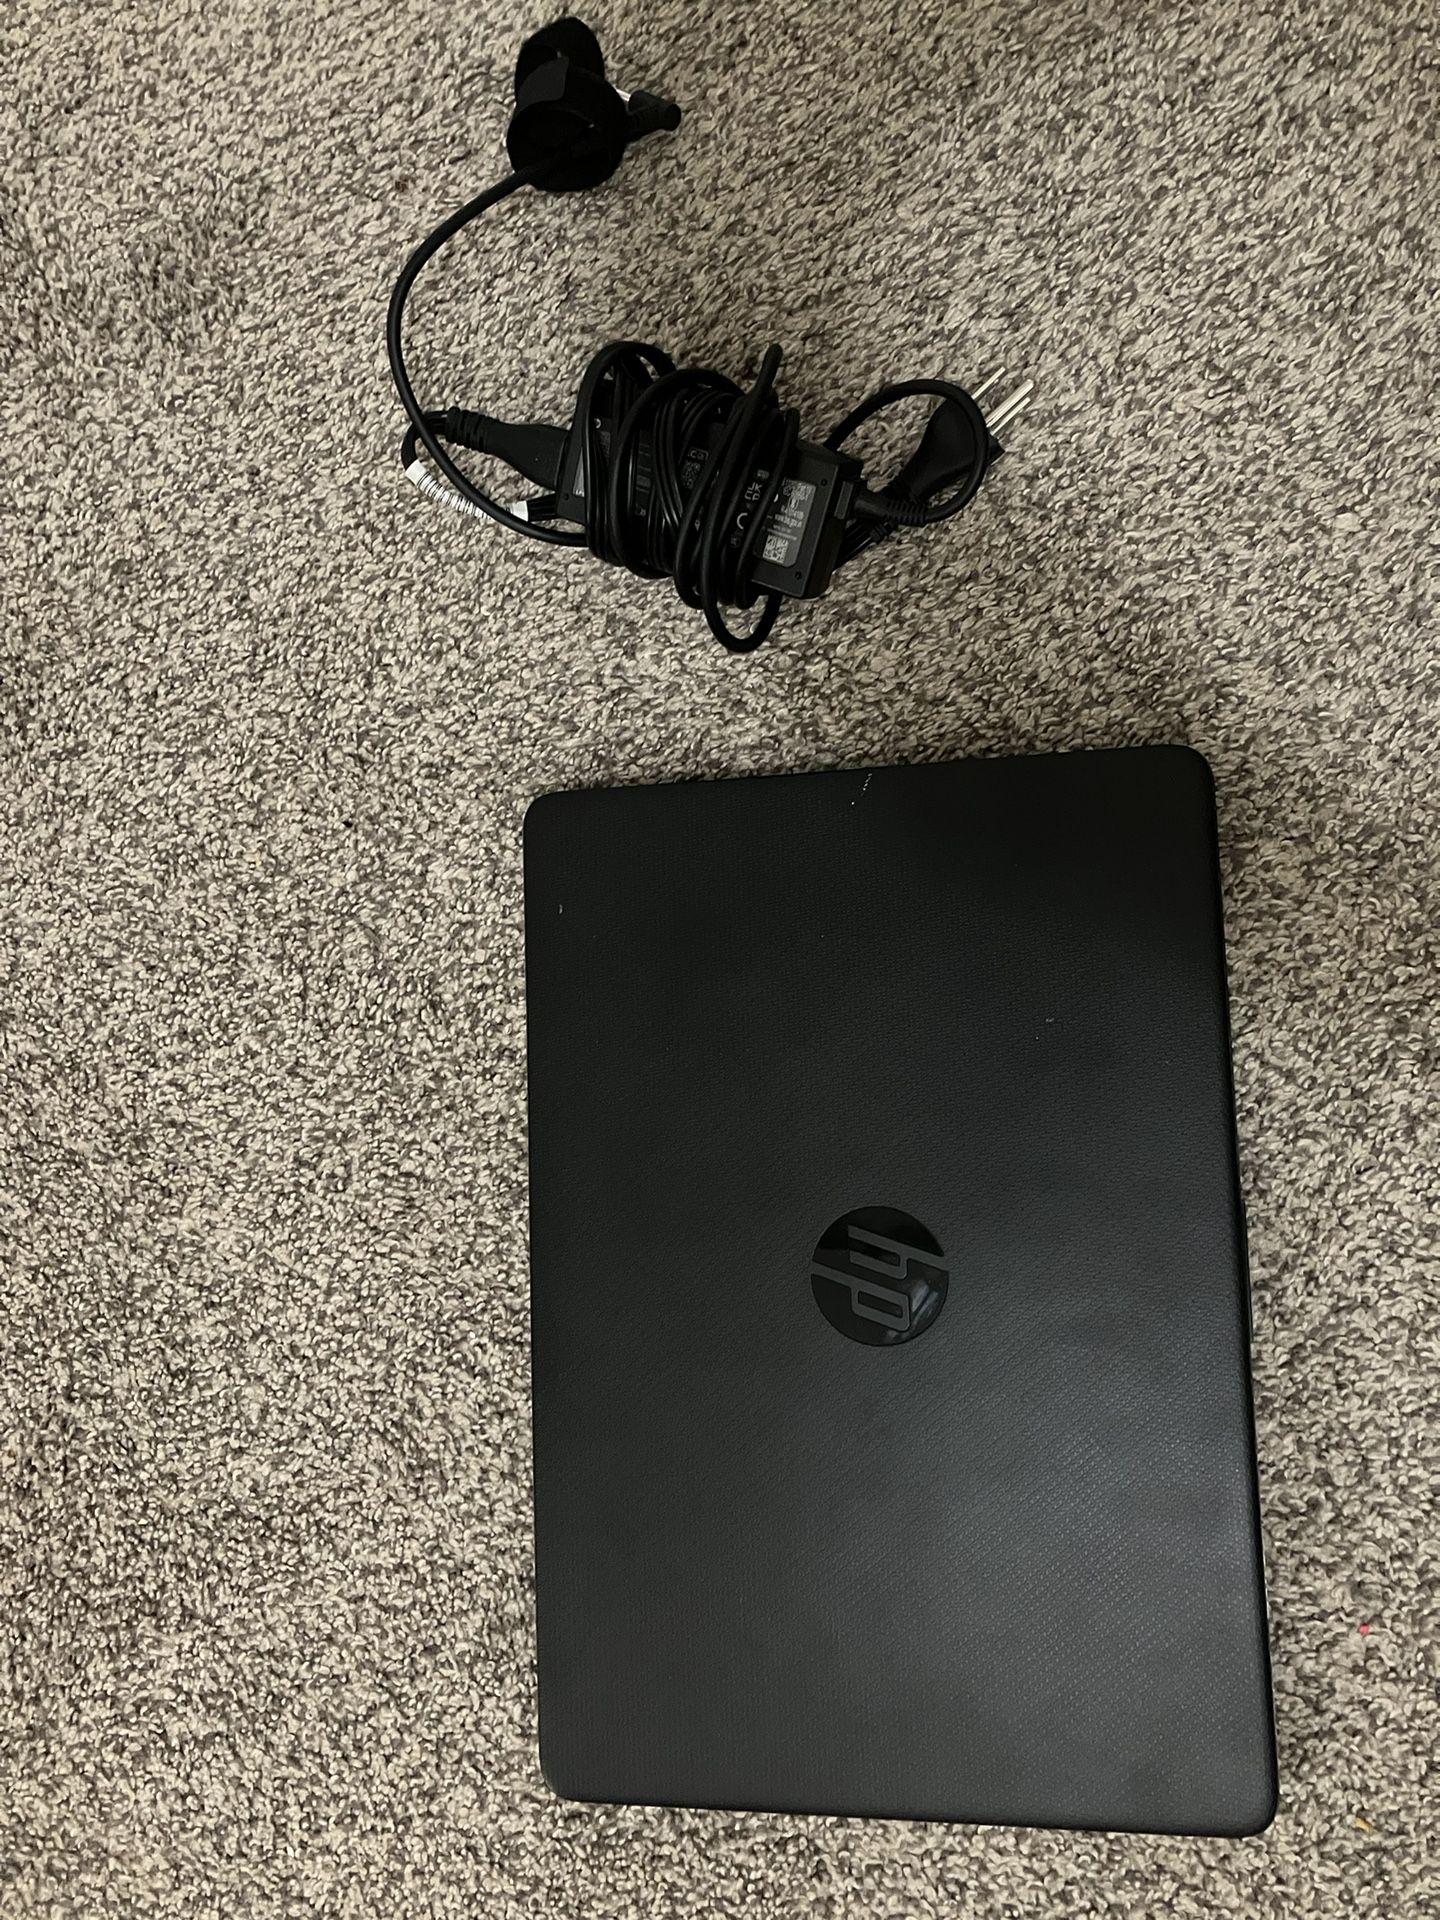 office/gaming laptop PC